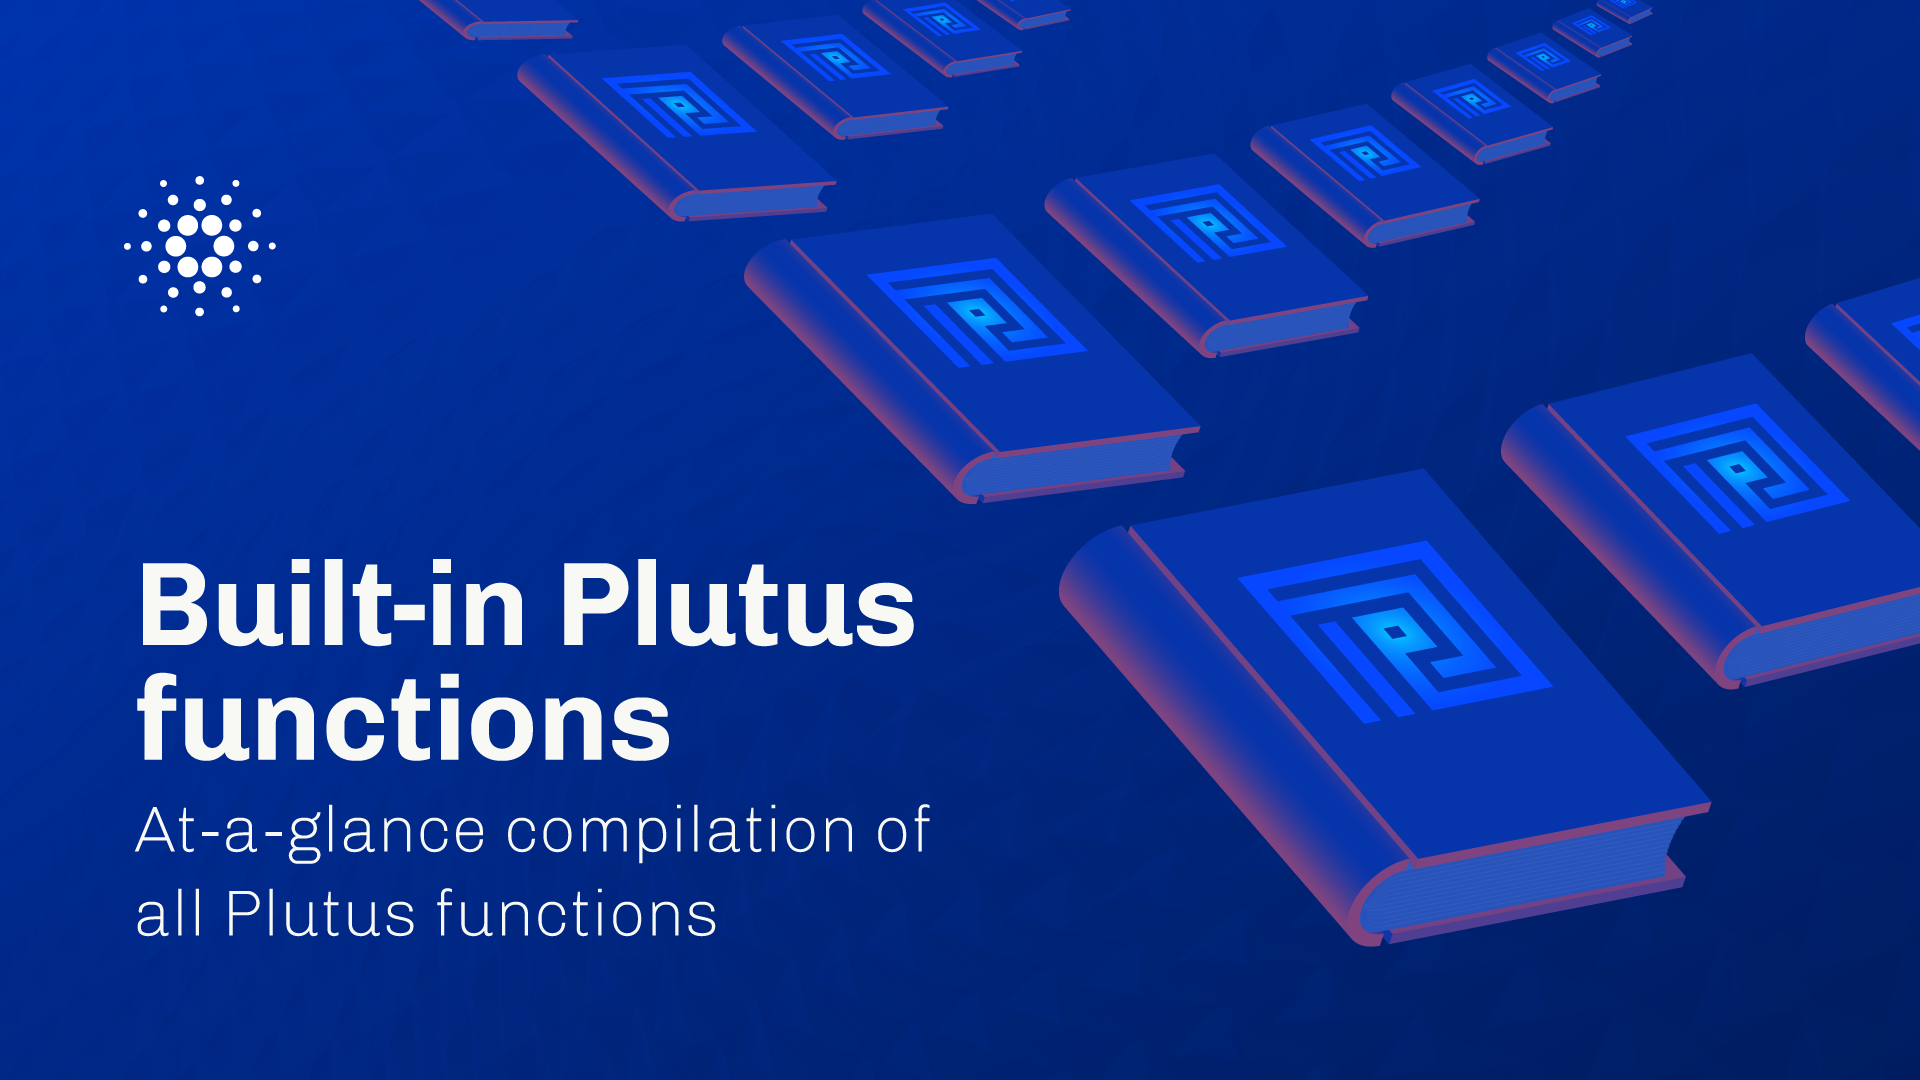 Built-in Plutus functions